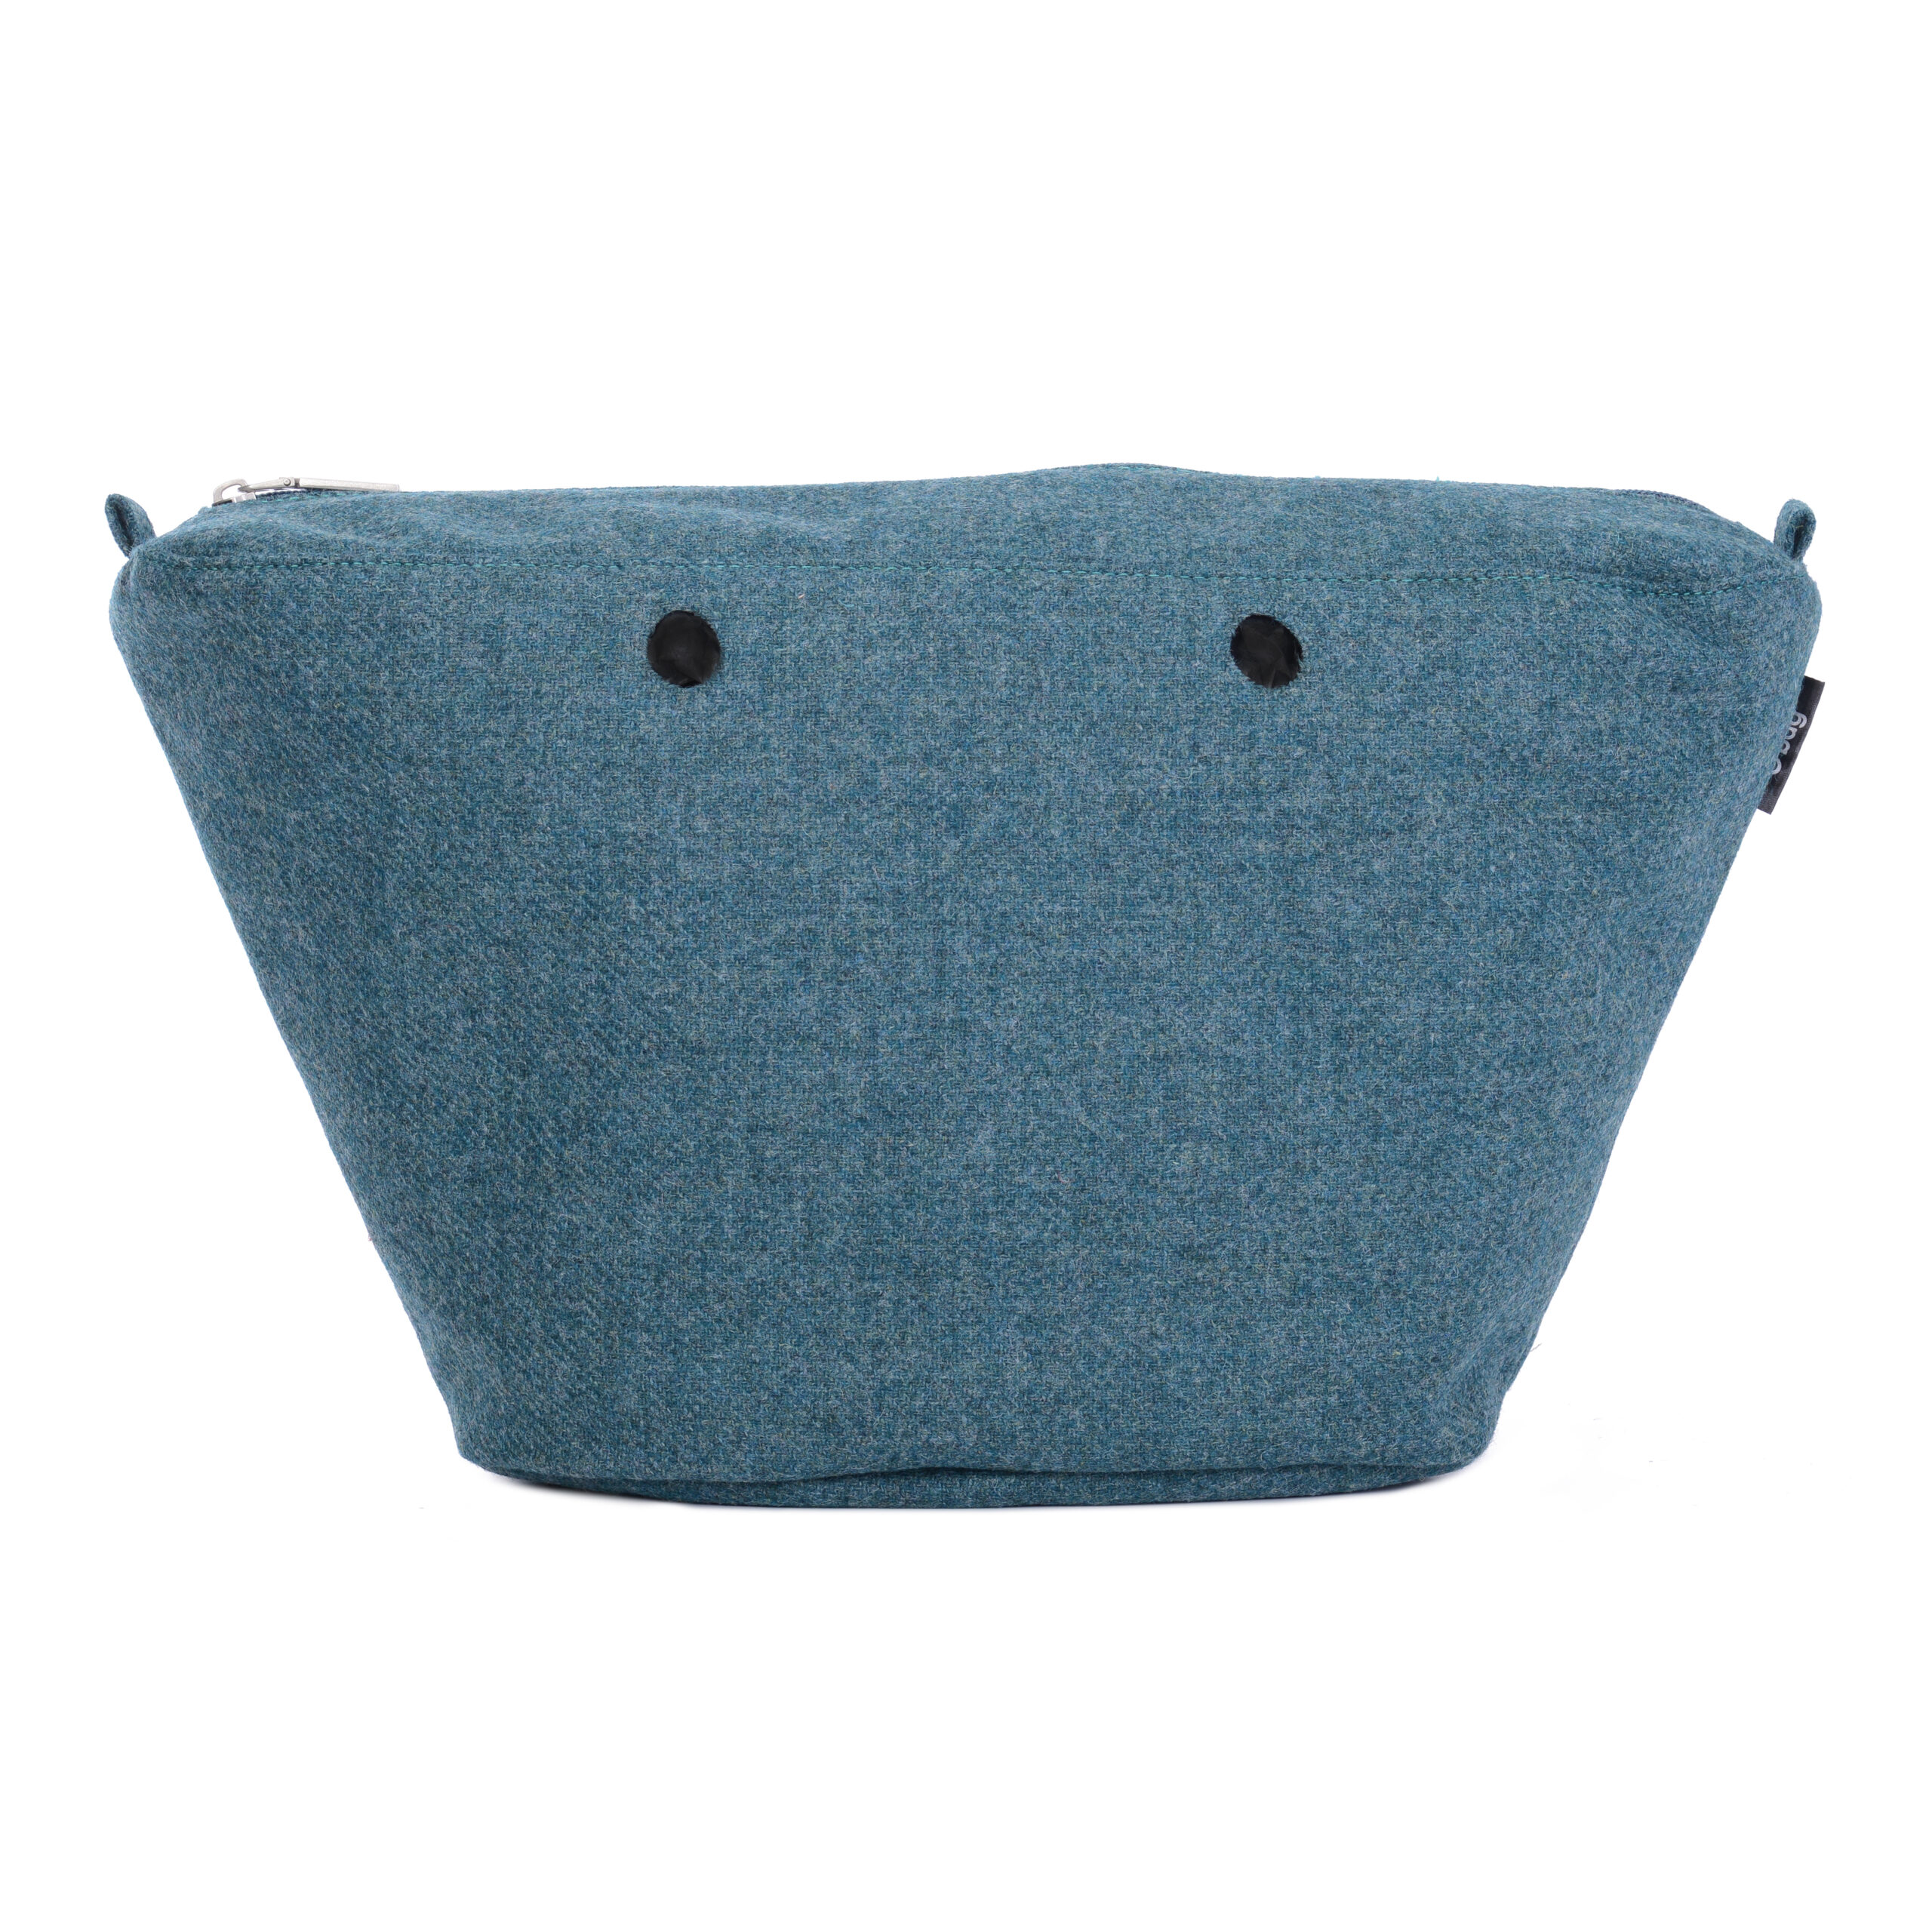 O Bag Knit Insert Zip Up United Tweed Fabric